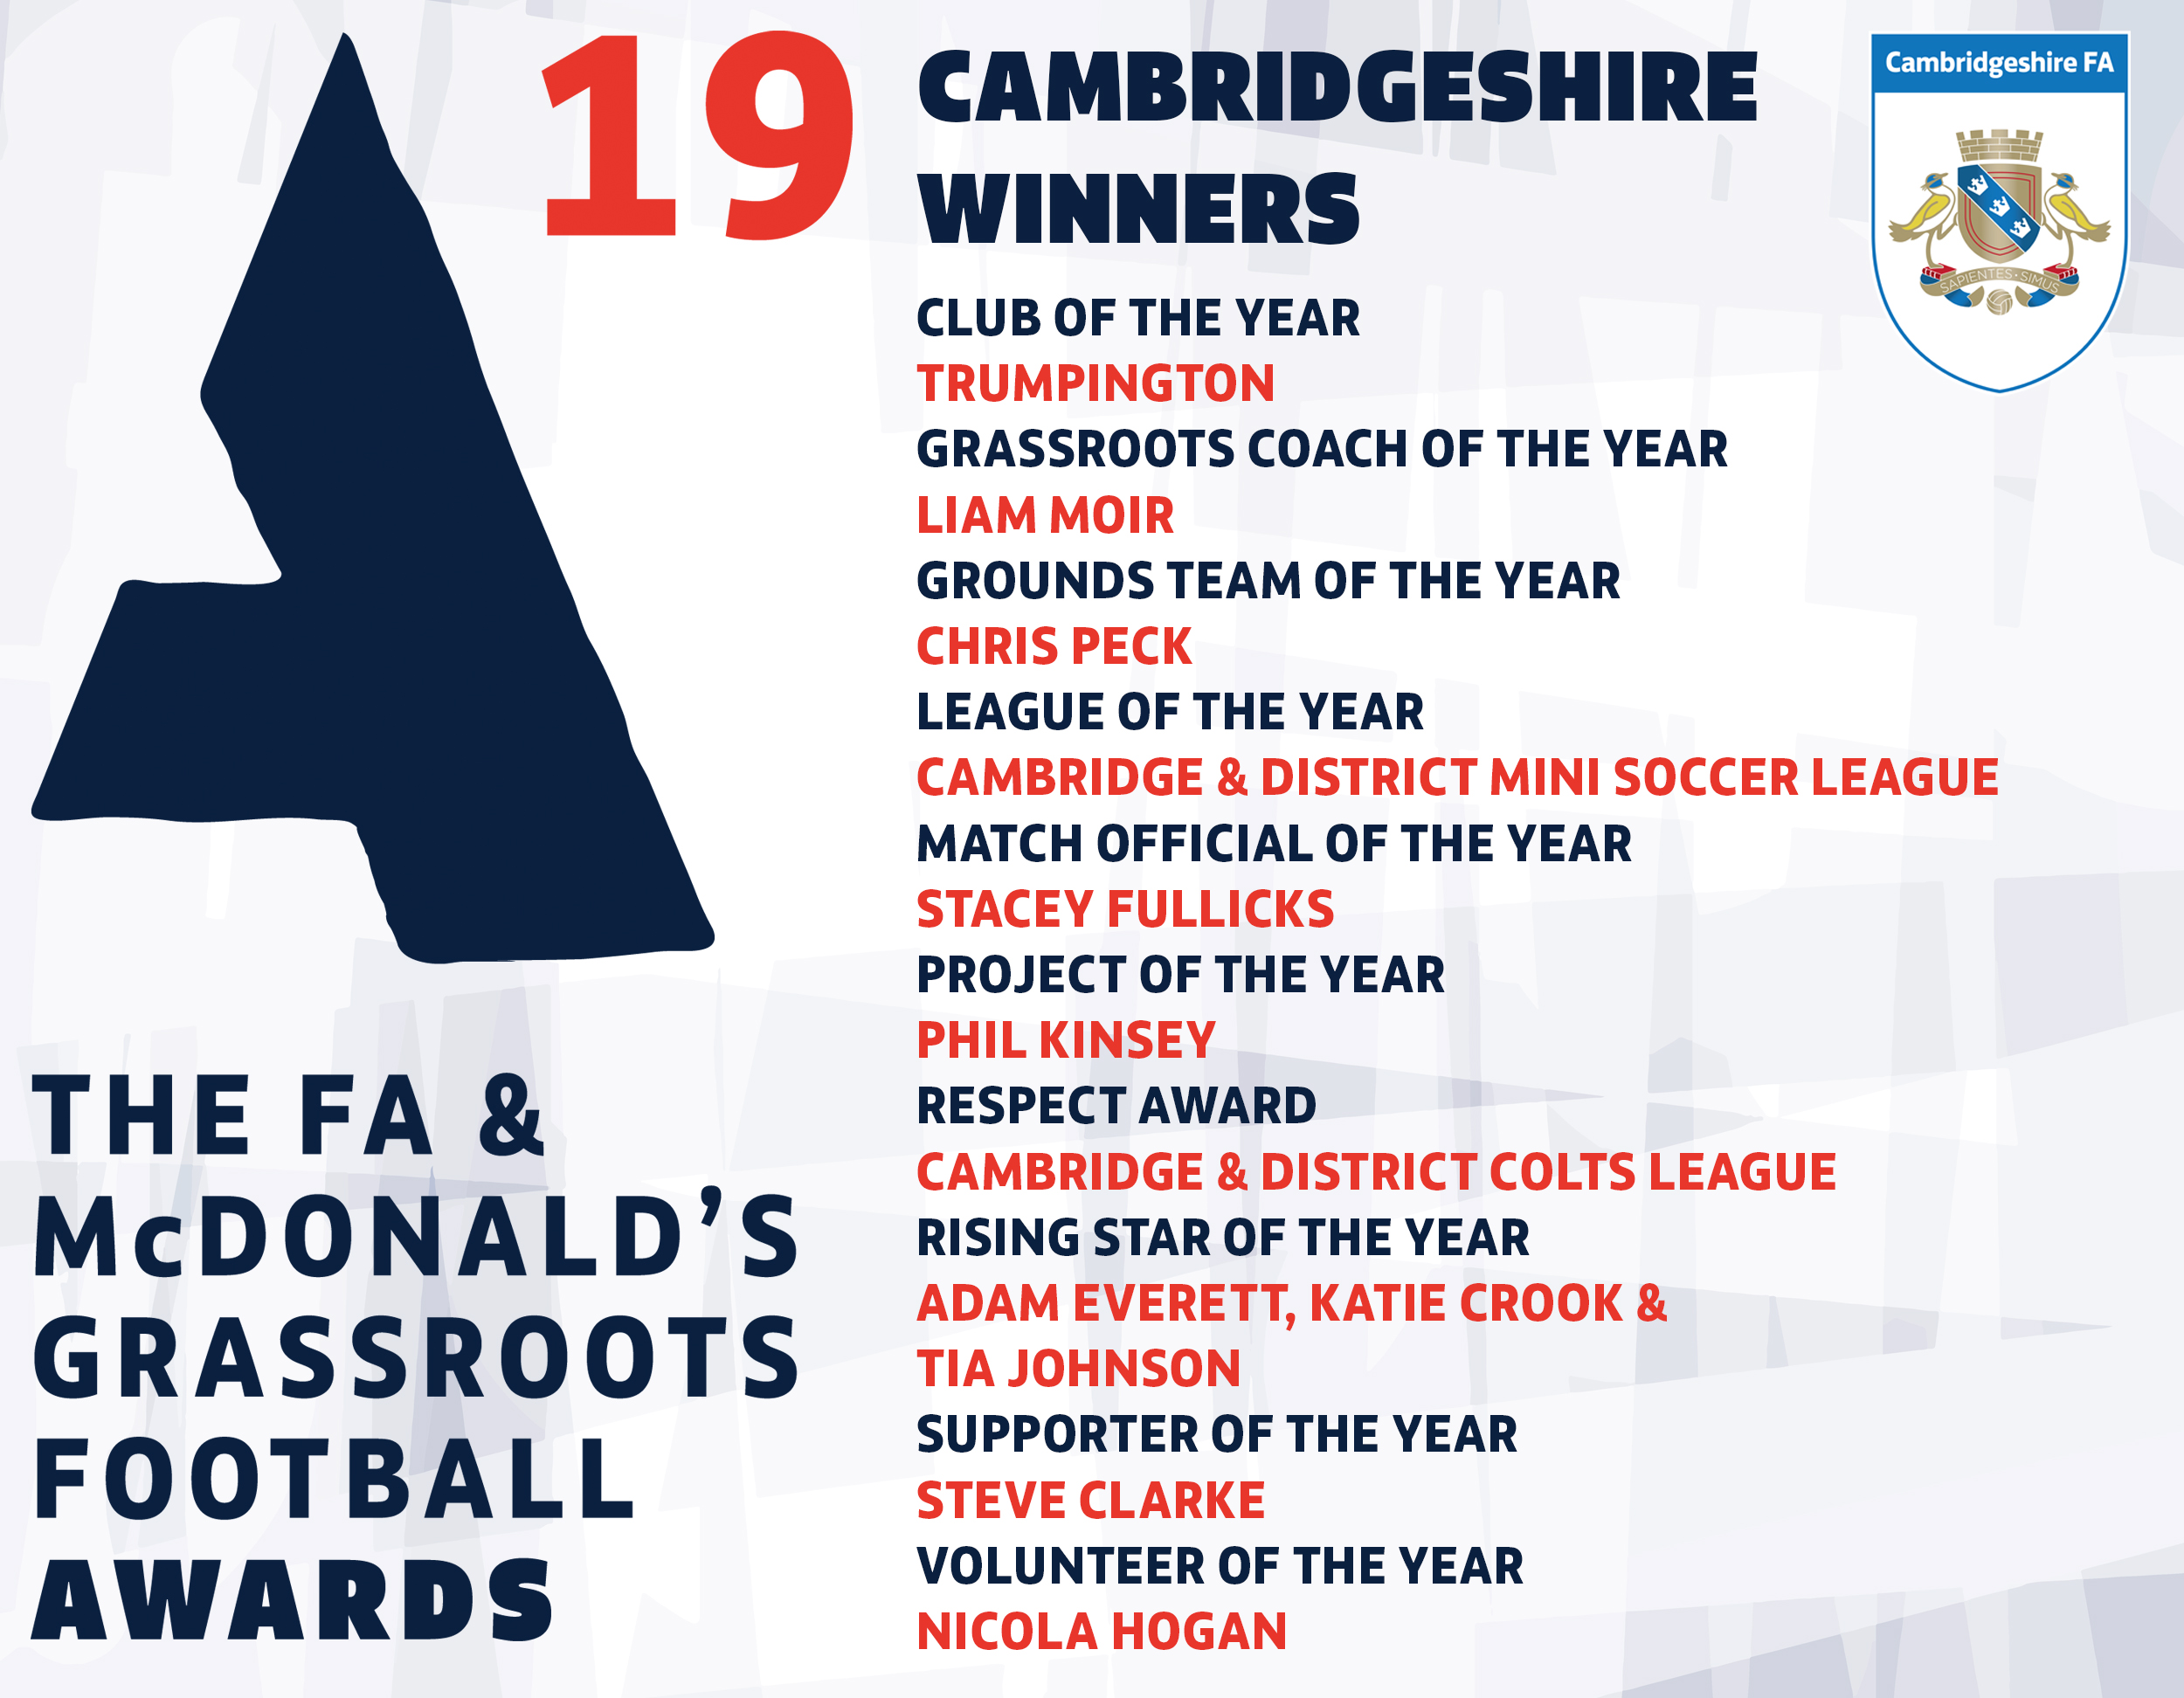 Cambs FA - FA & McDonald's Grassroots Football Awards 2019 Winners